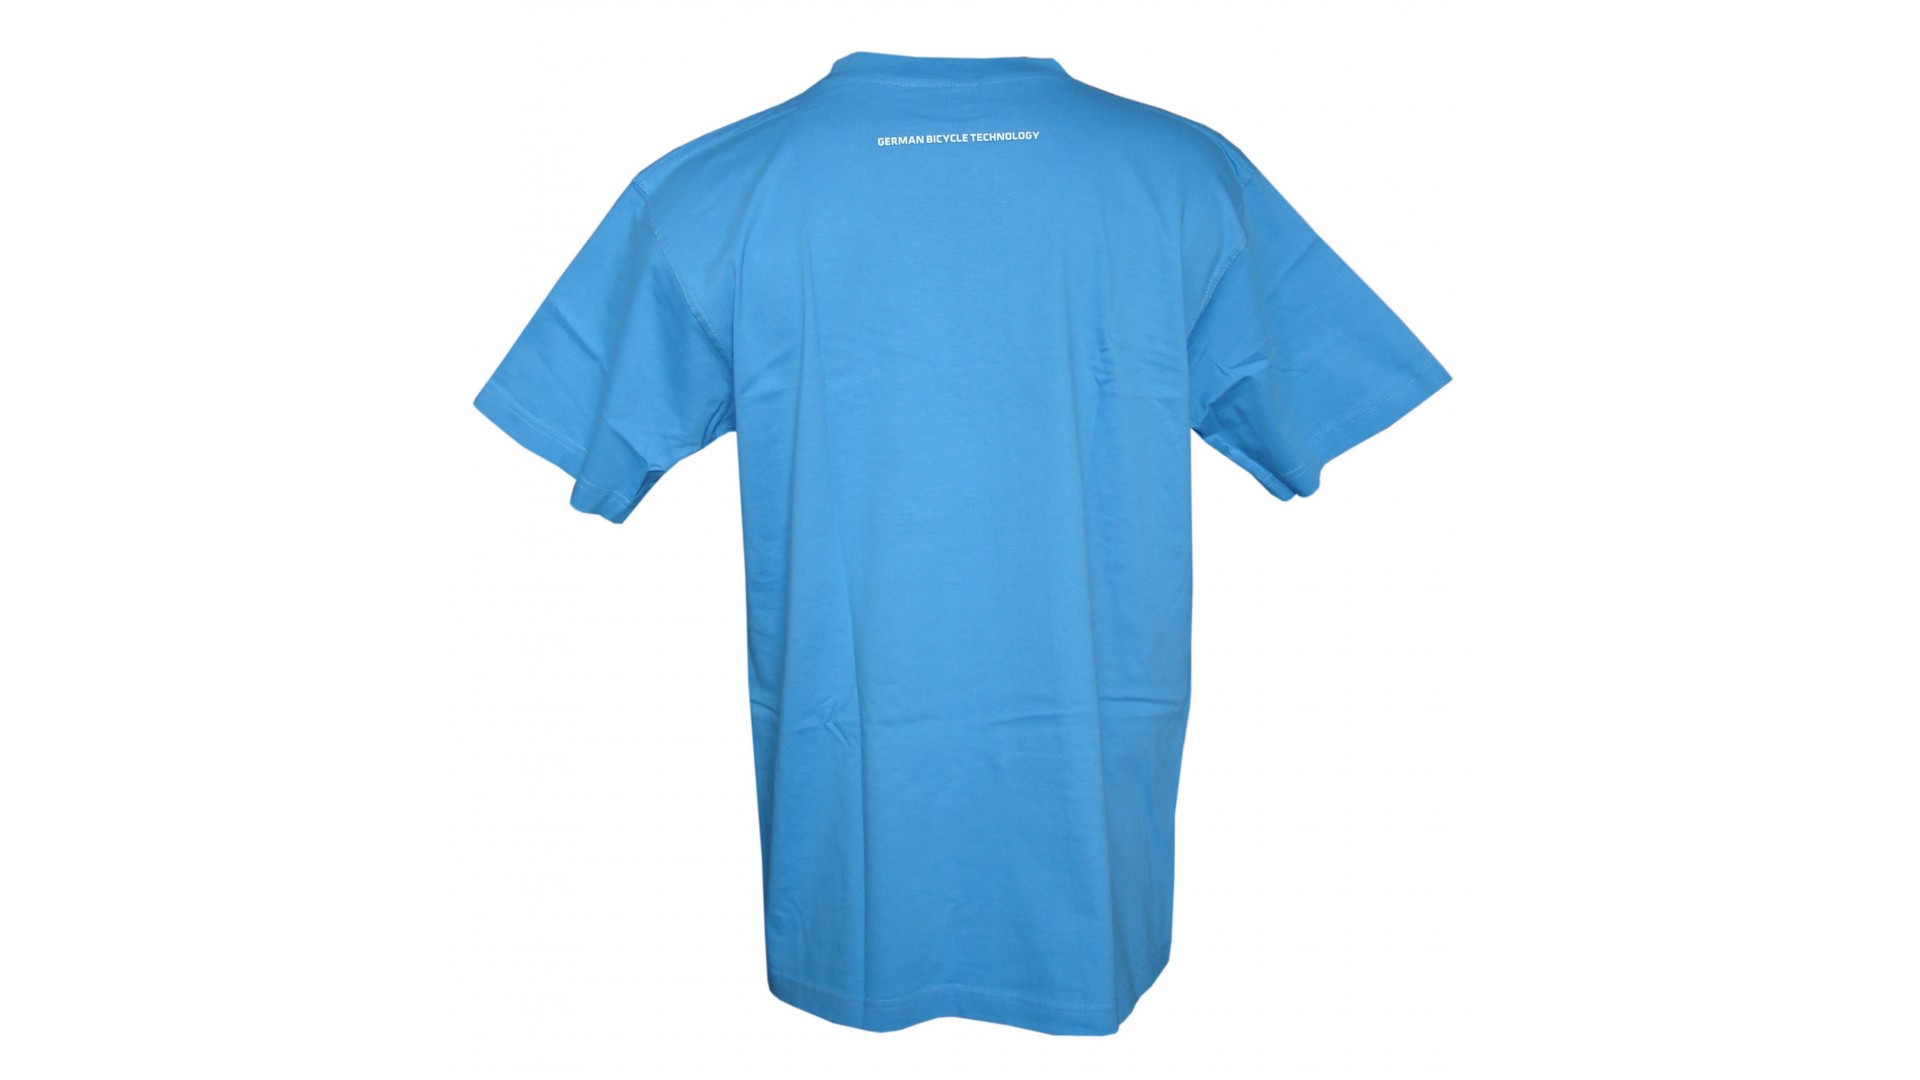 Футболка Ghost T-shirt blue год 2015 вид сзади